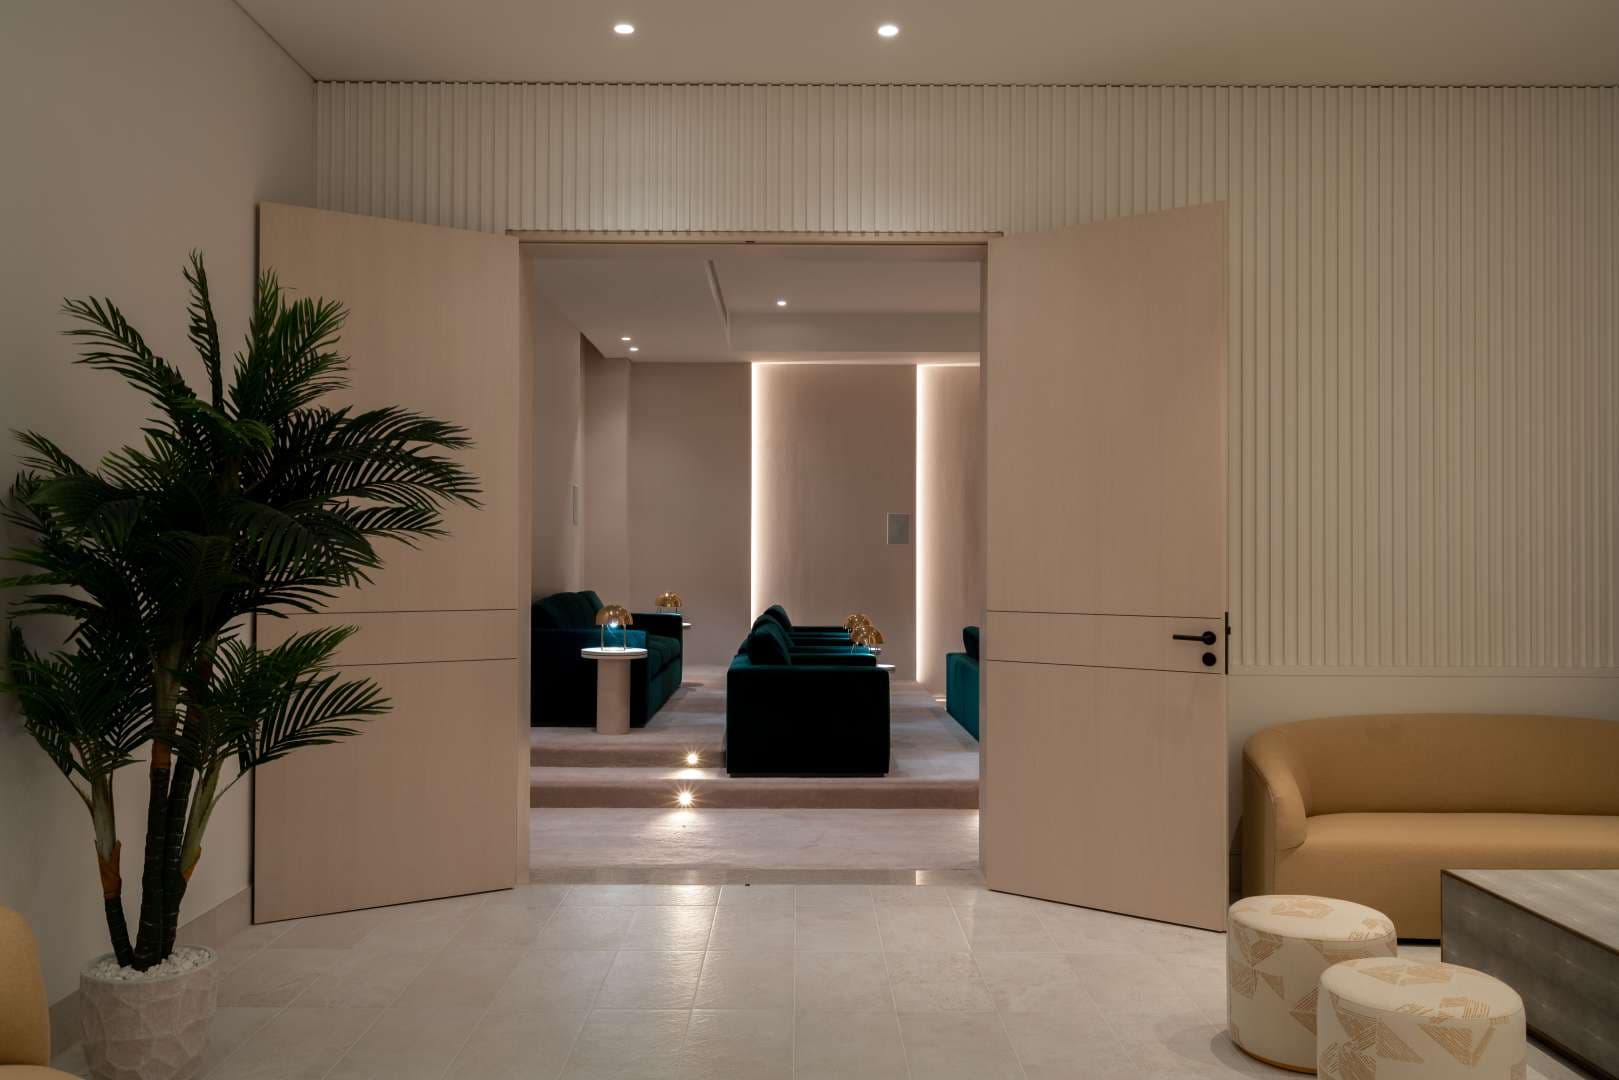 9 Bedroom Villa For Sale Dubai Hills View Lp05164 1e4fee11f2925500.jpg